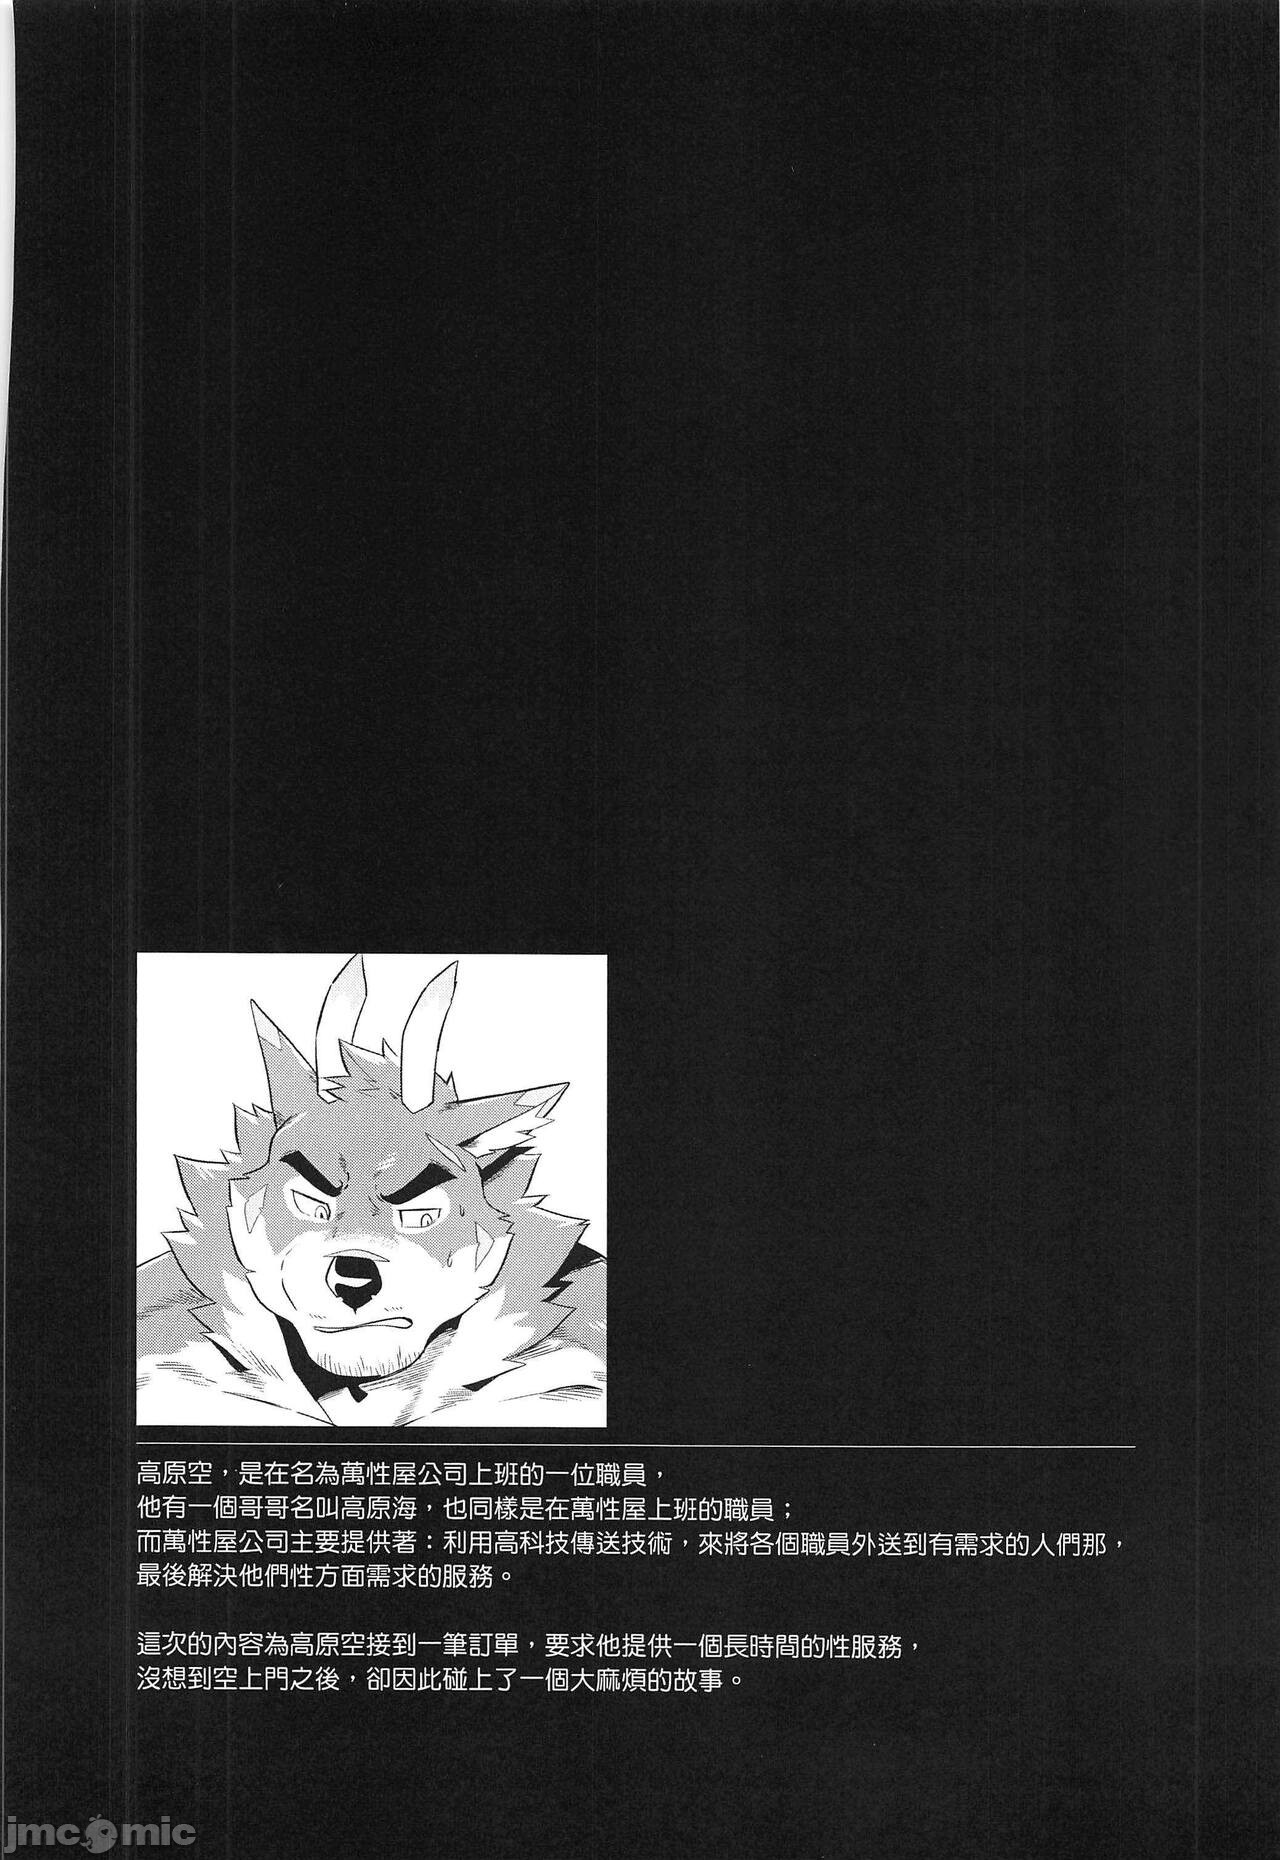 [Taki Kaze] Special Delivery Service vol.3 (Chinese) [塔吉風] 特殊外送服務 vol.3 (中國語)